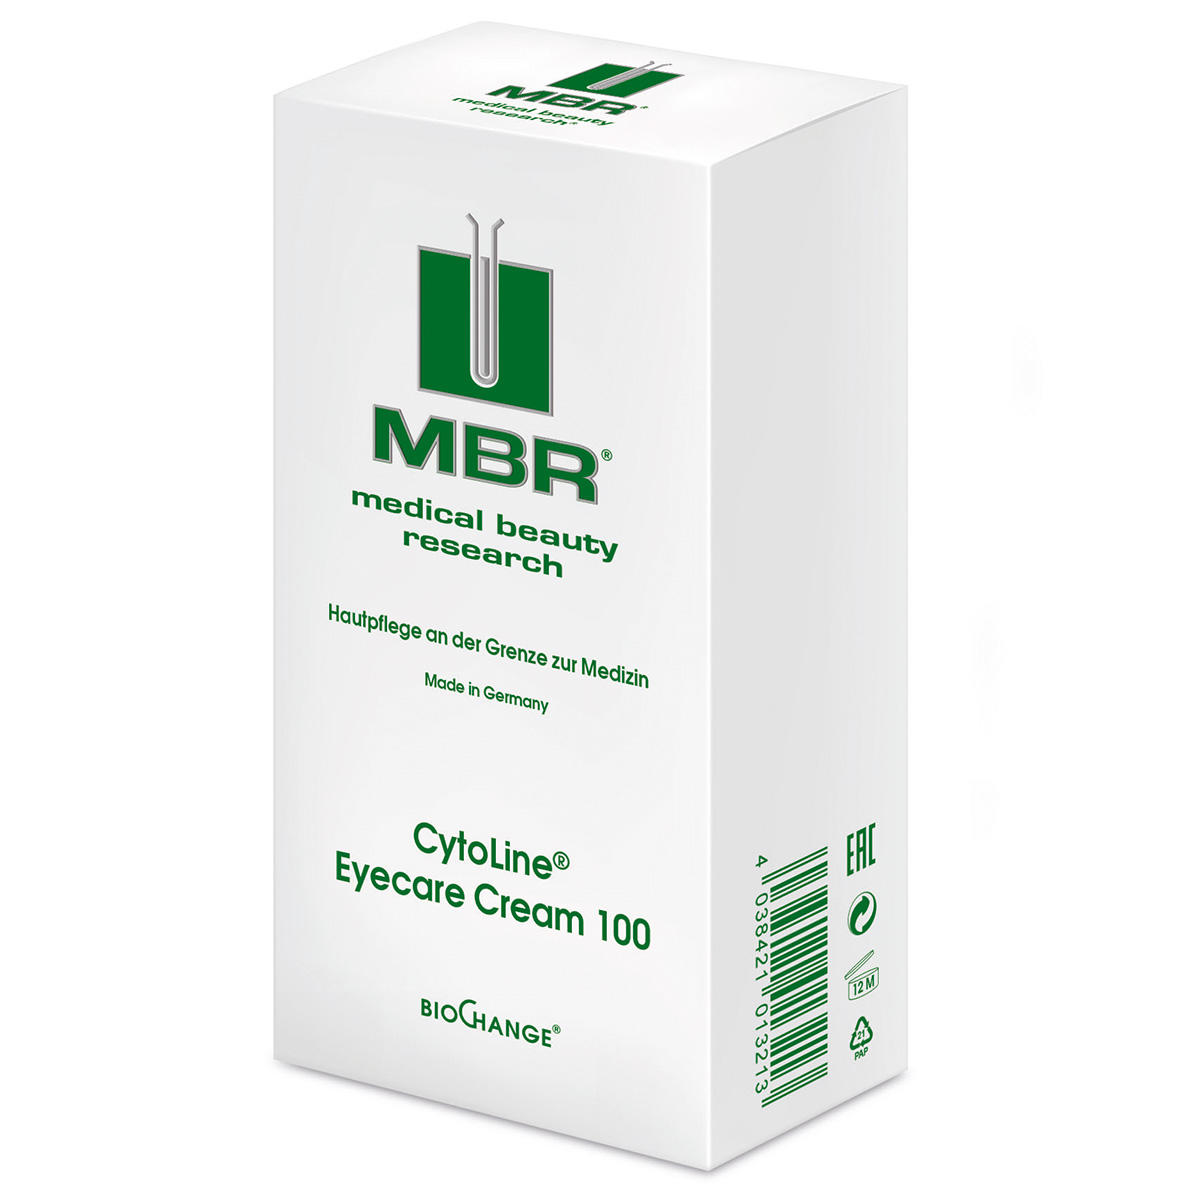 MBR Medical Beauty Research BioChange CytoLine Eyecare Cream 100 15 ml - 3